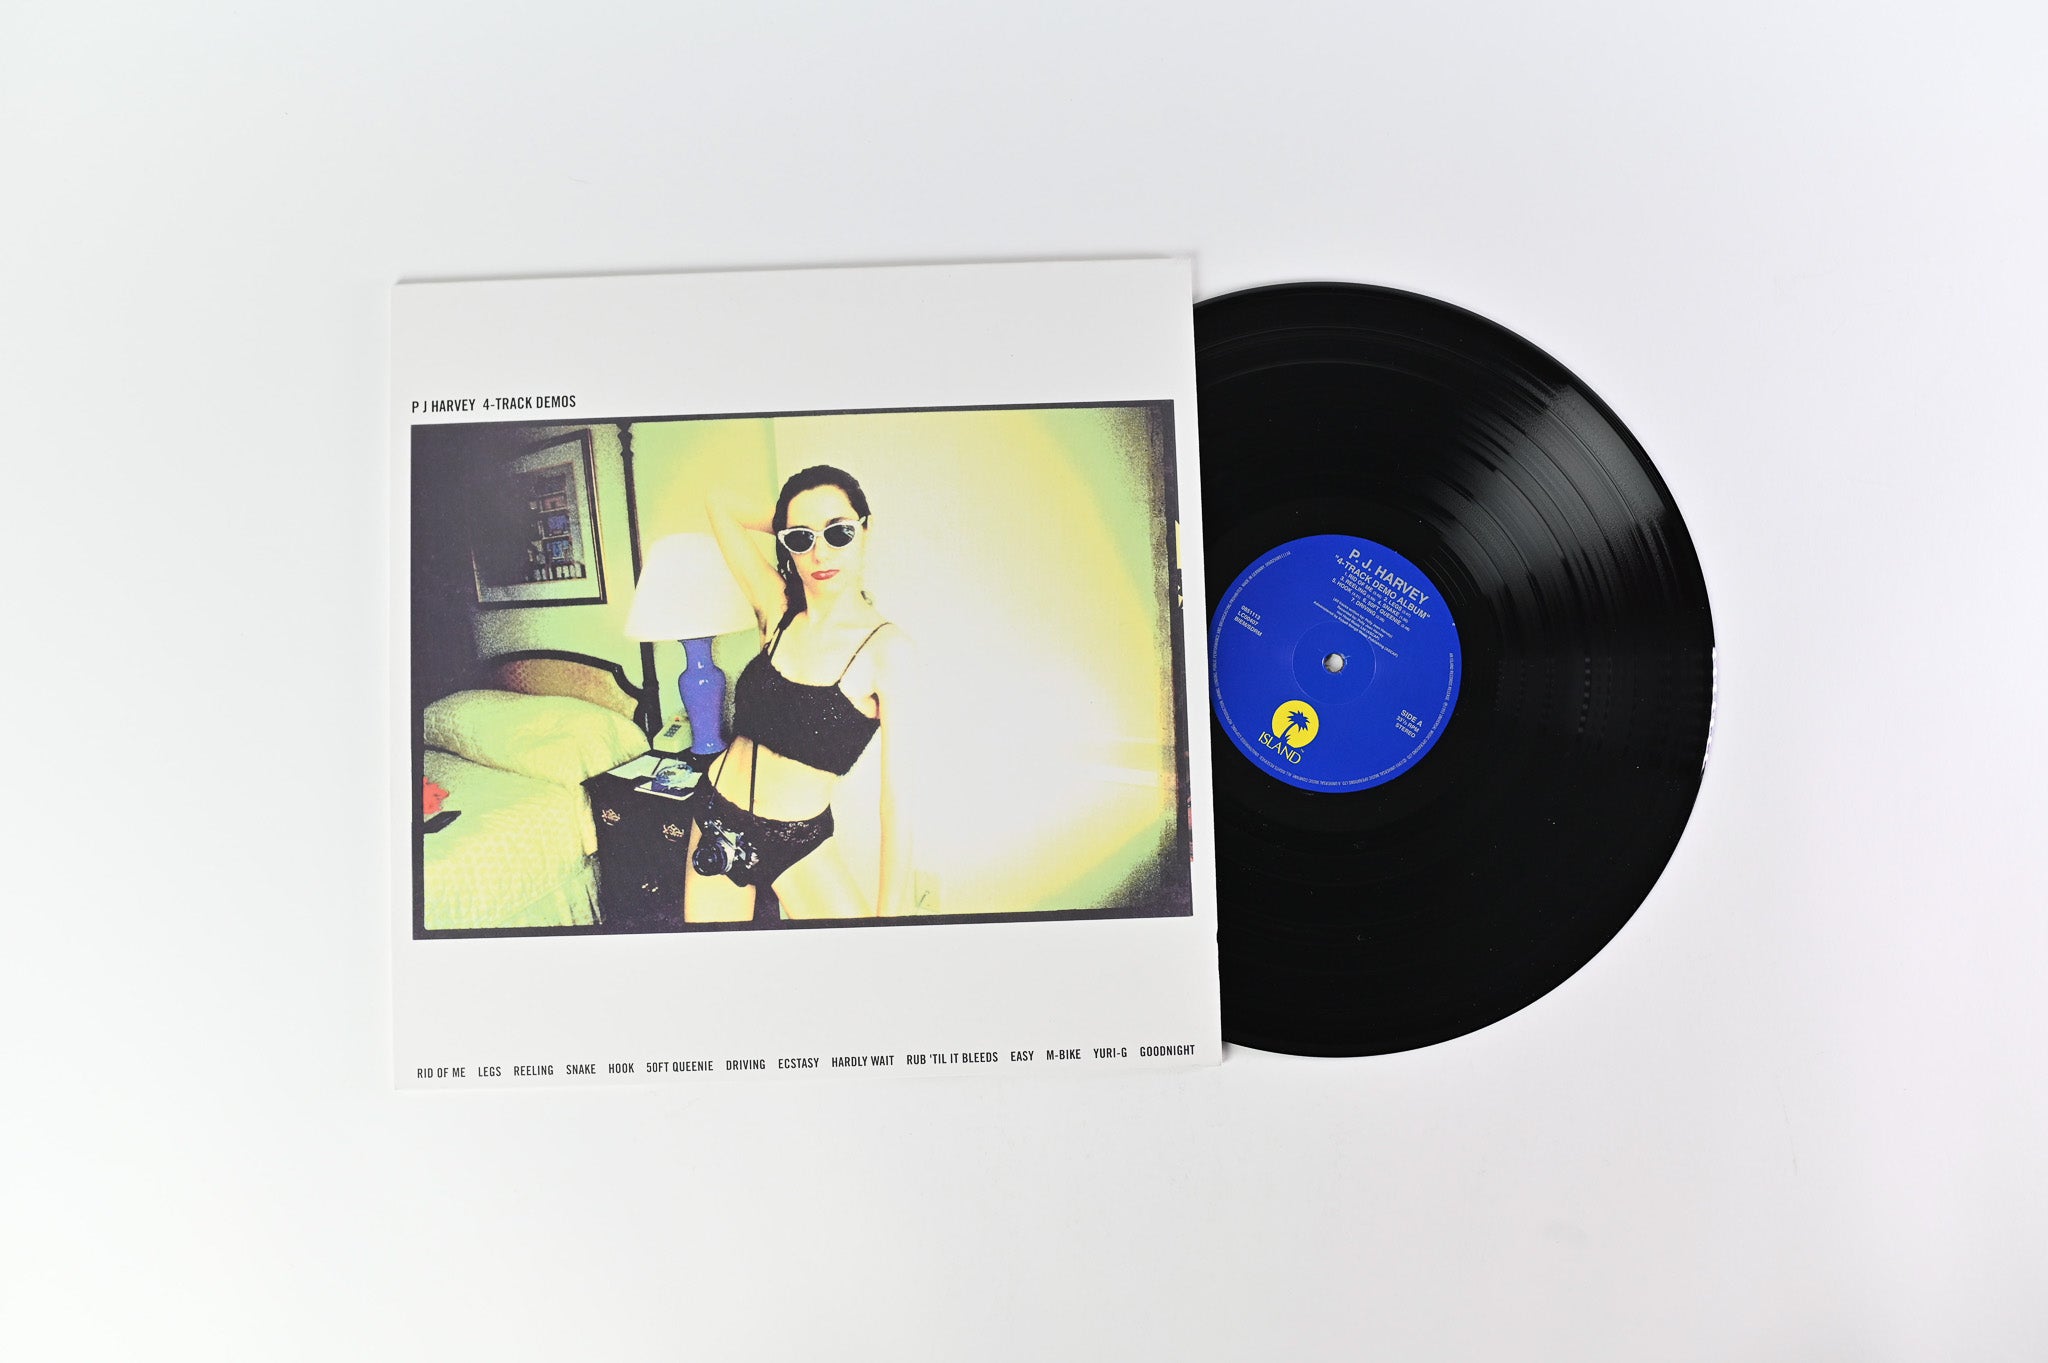 PJ Harvey - 4-Track Demos on Island Records